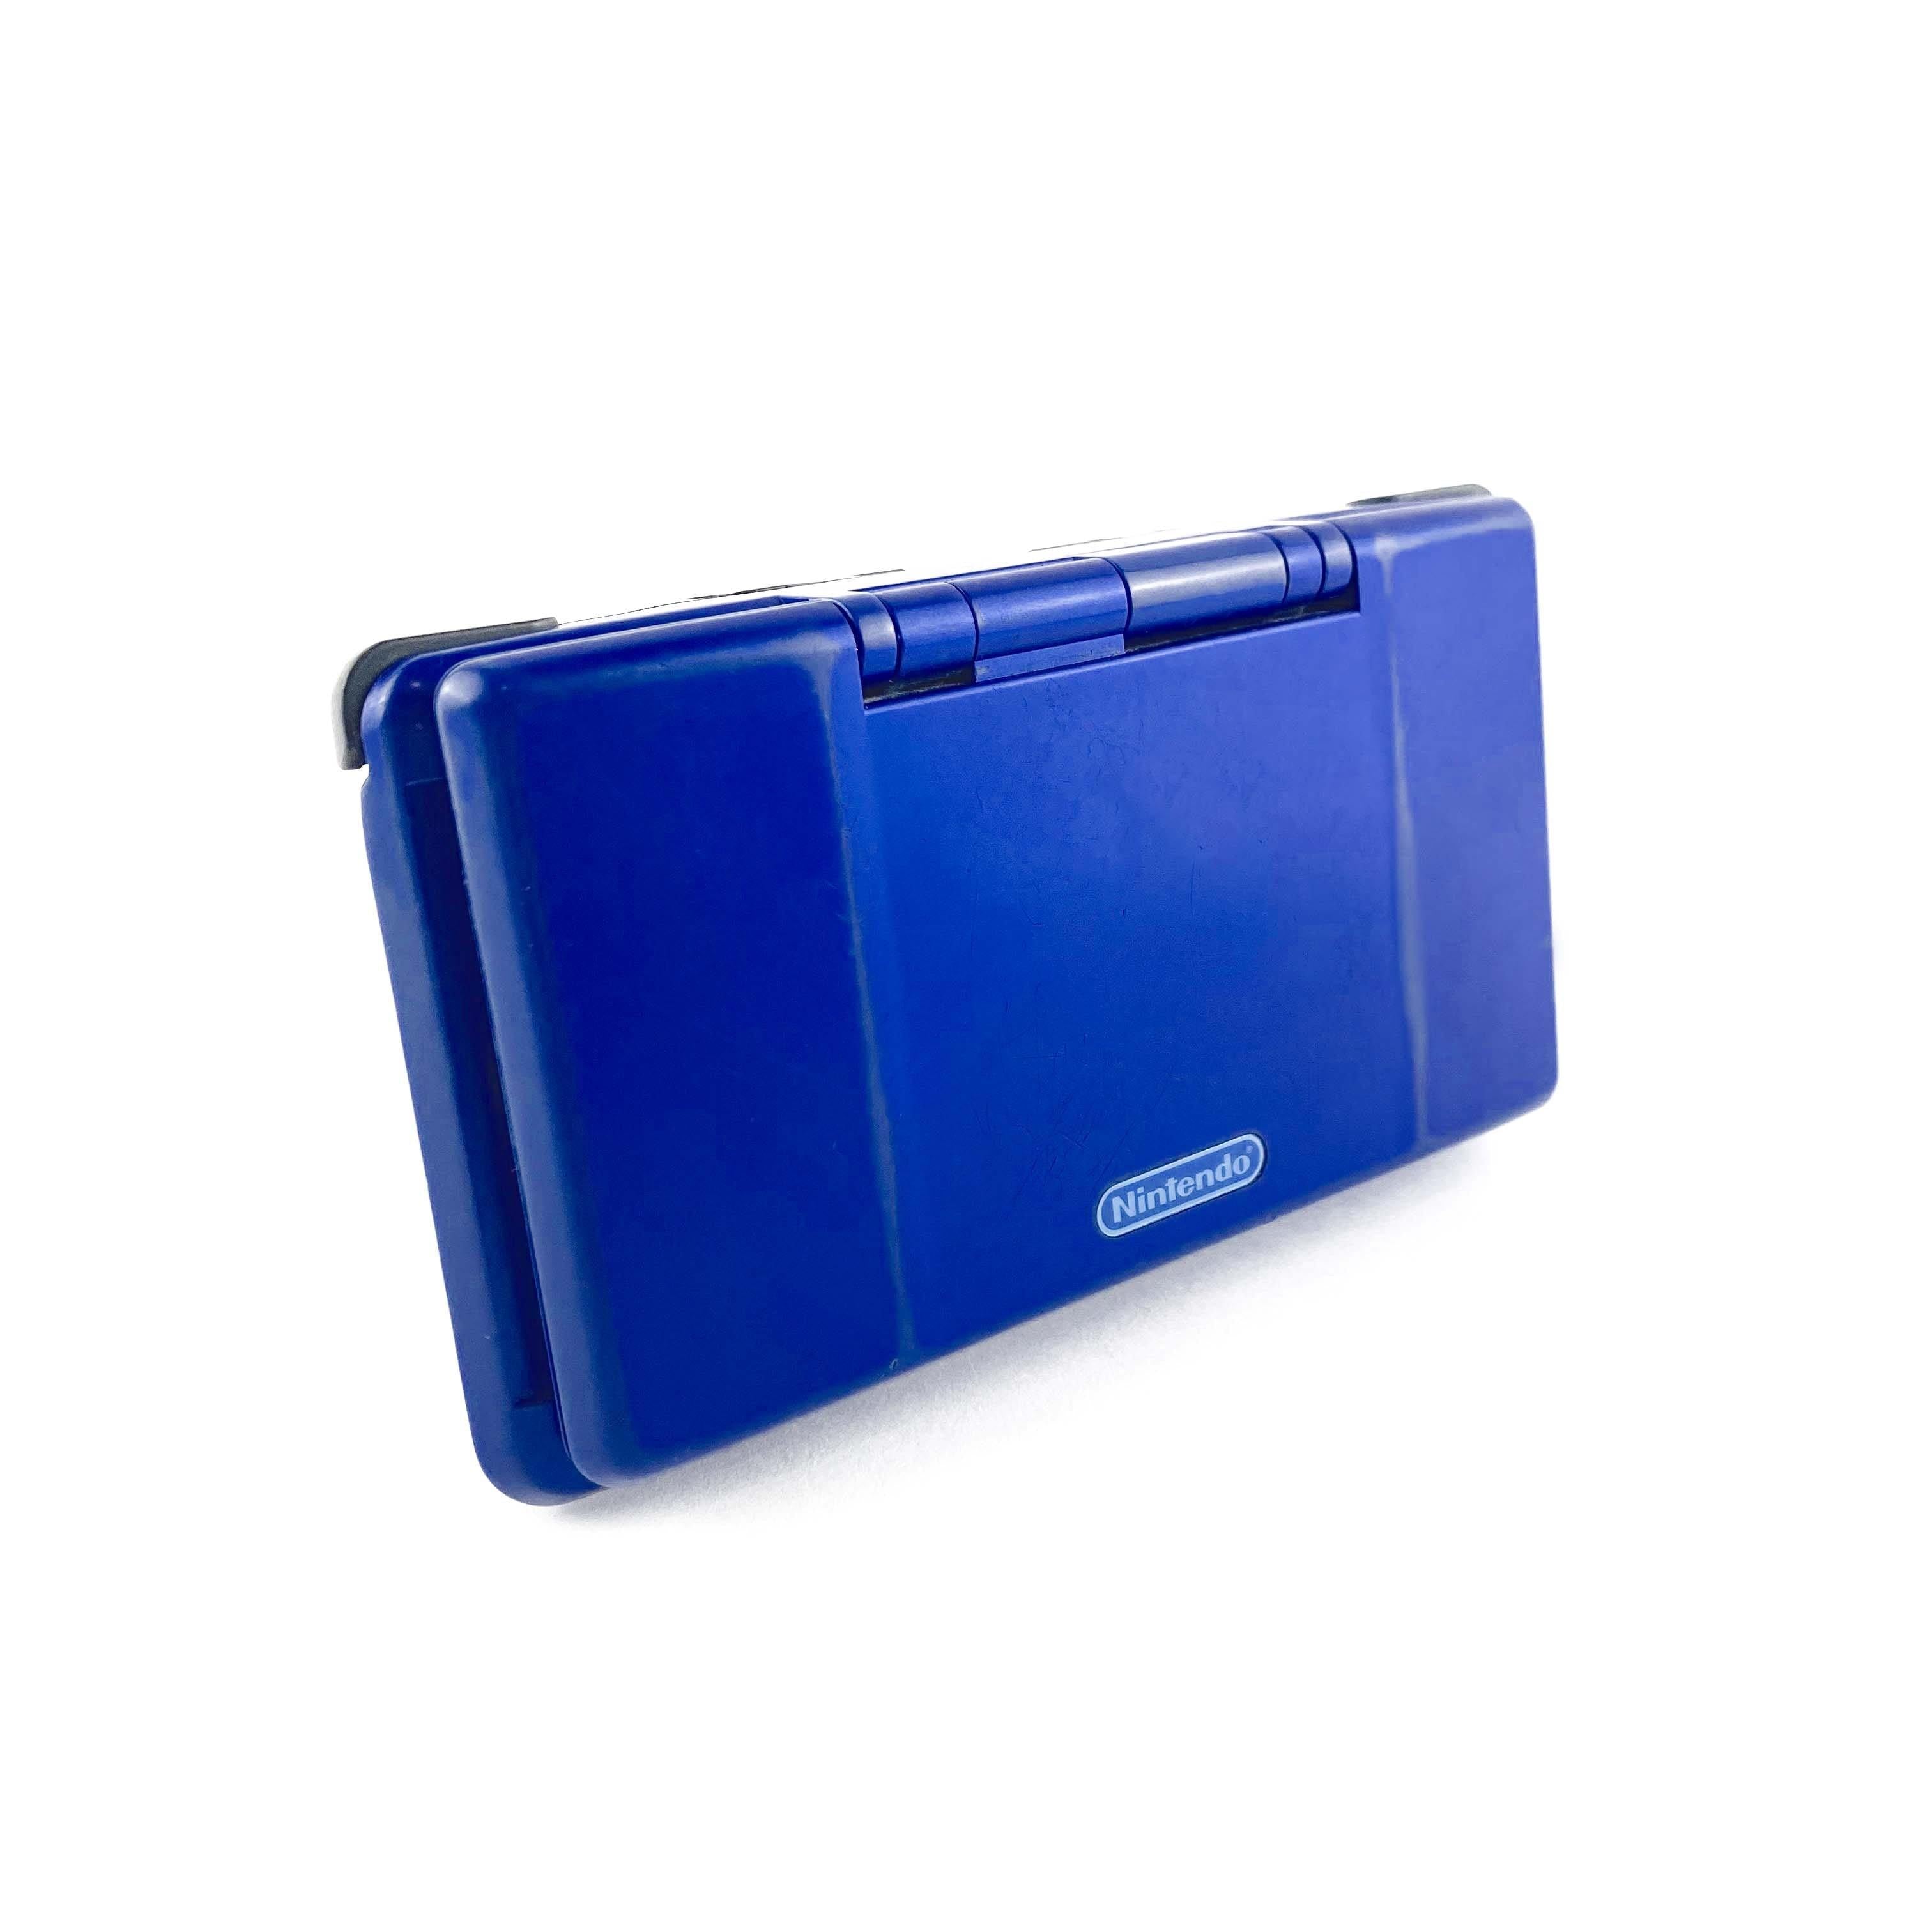 Original Nintendo DS Electric Blue Handheld Console (NRT-001)